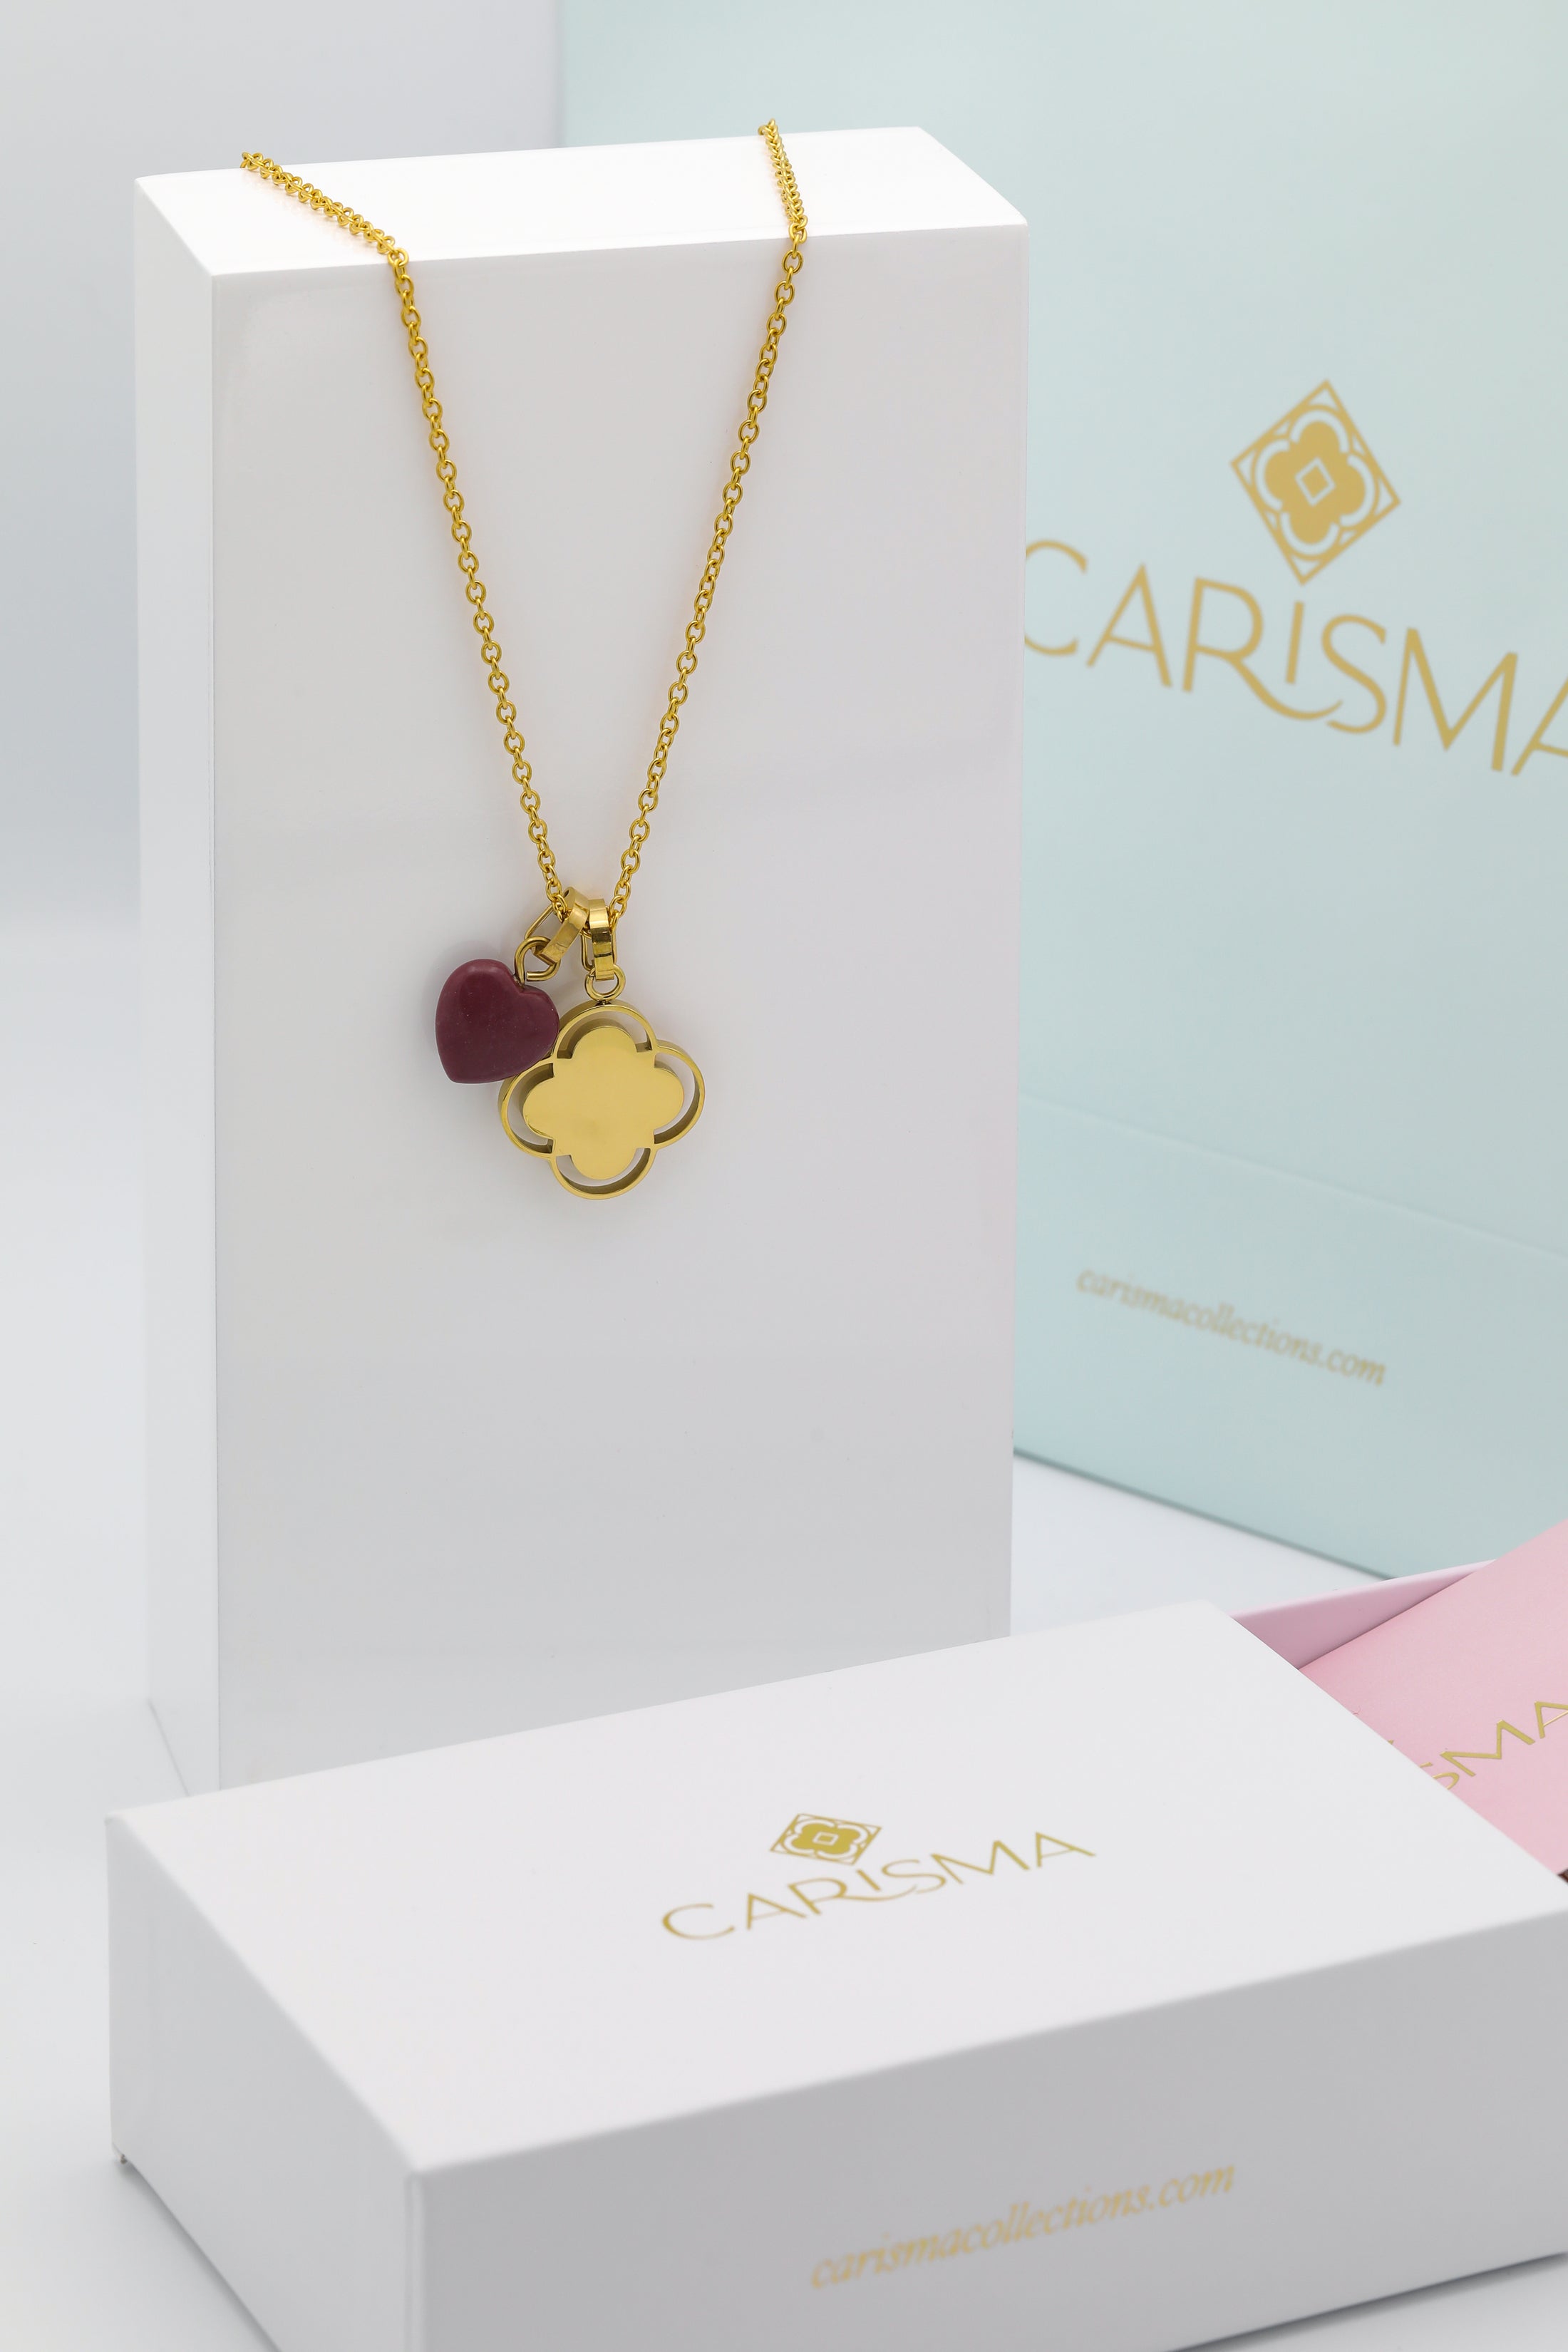 Carisma Logo Engravable Pendant &amp; Heart Birthstone Necklace Gift Set